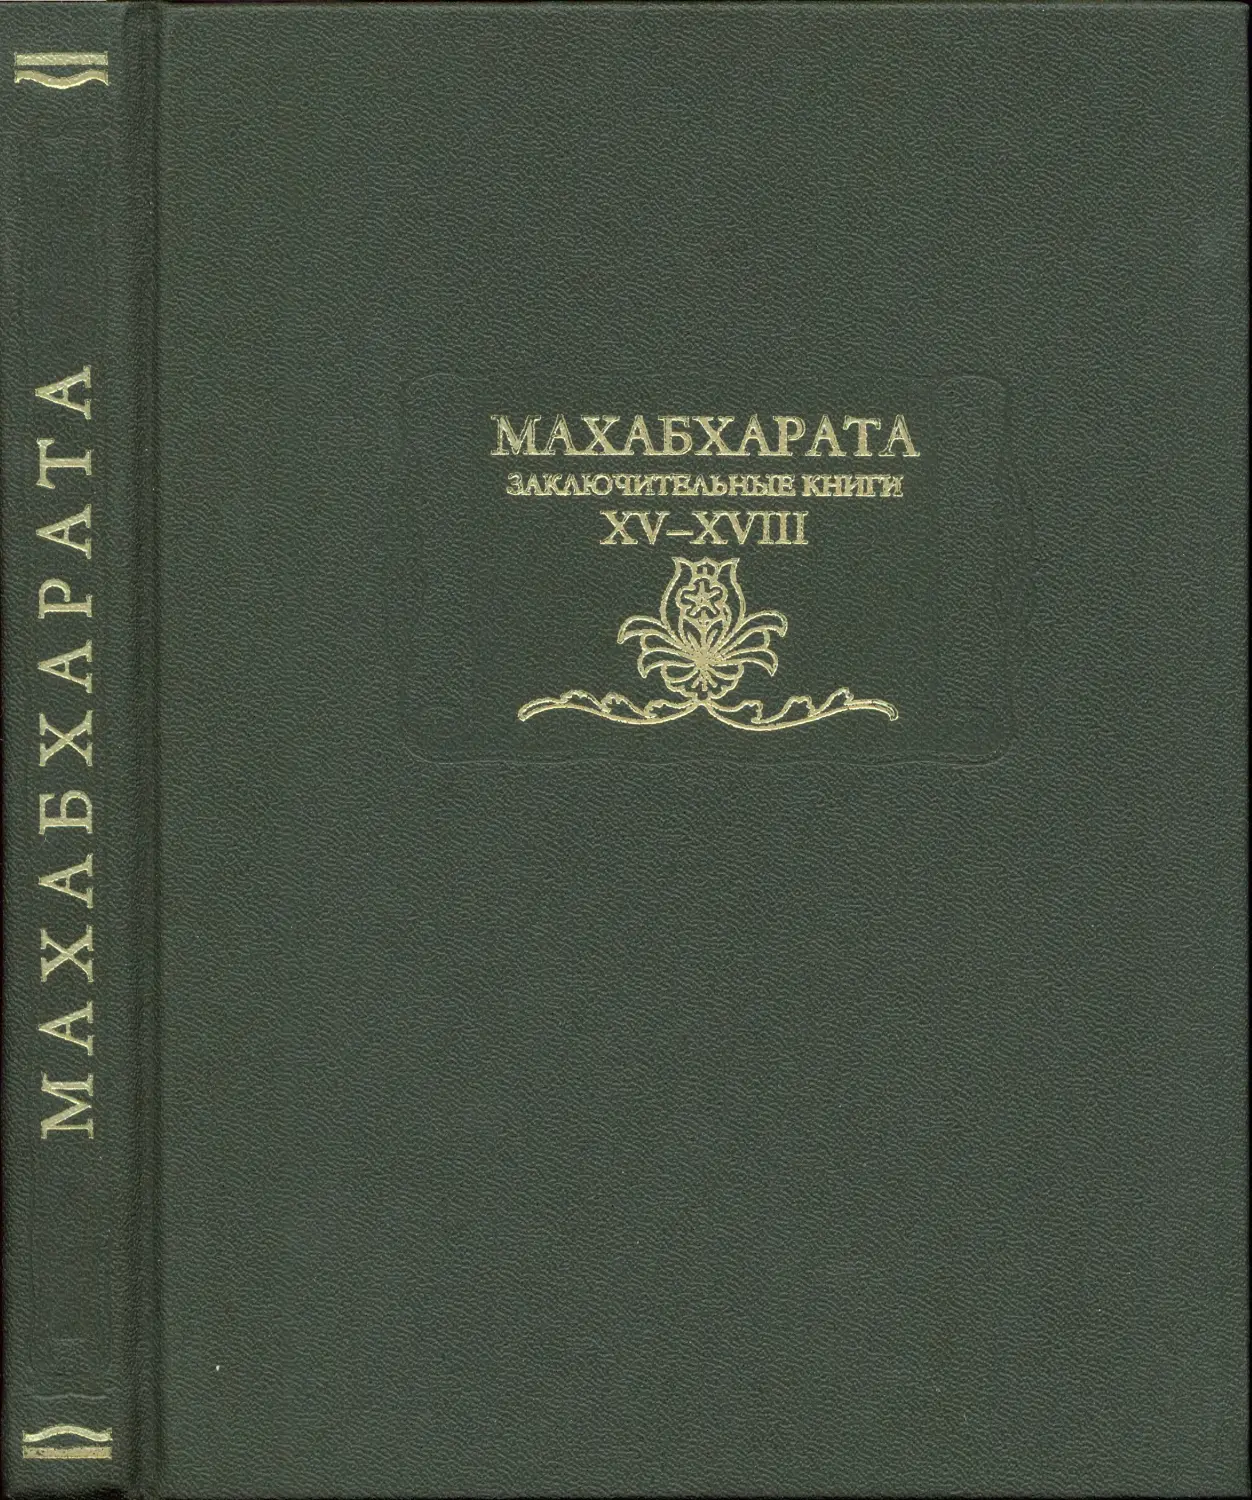 Махабхарата. Заключительные книги XV – XVIII – 2005